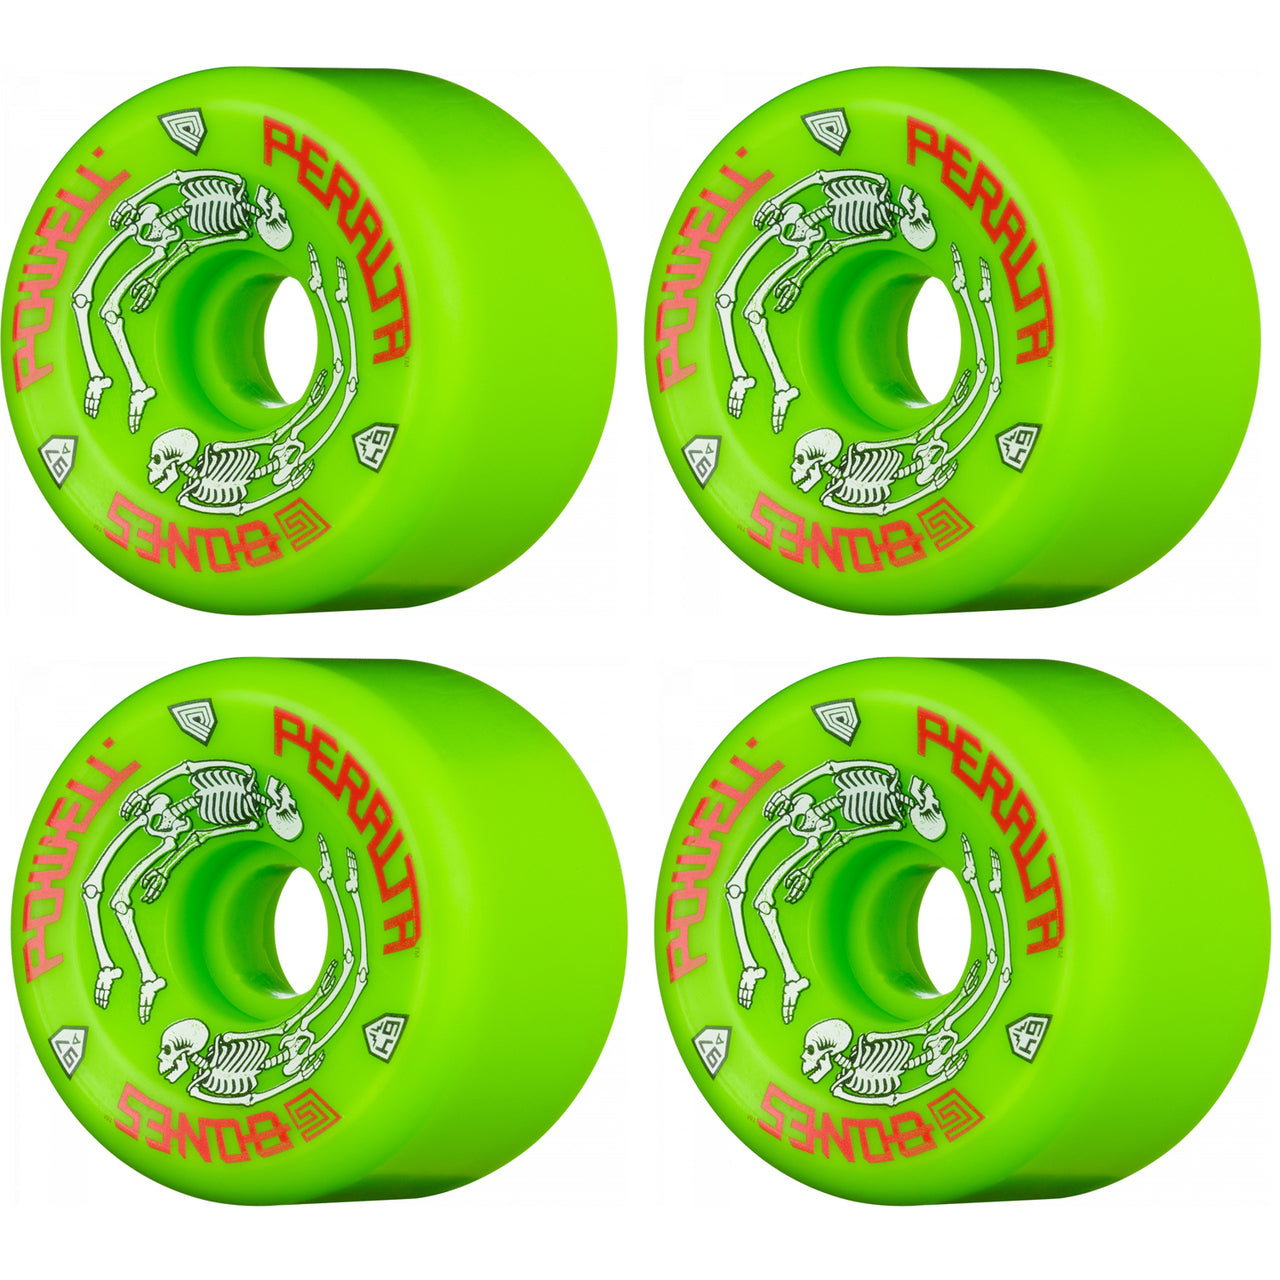 Powell Peralta G-Bones Skateboard Wheels Lime Green 64MM 97A